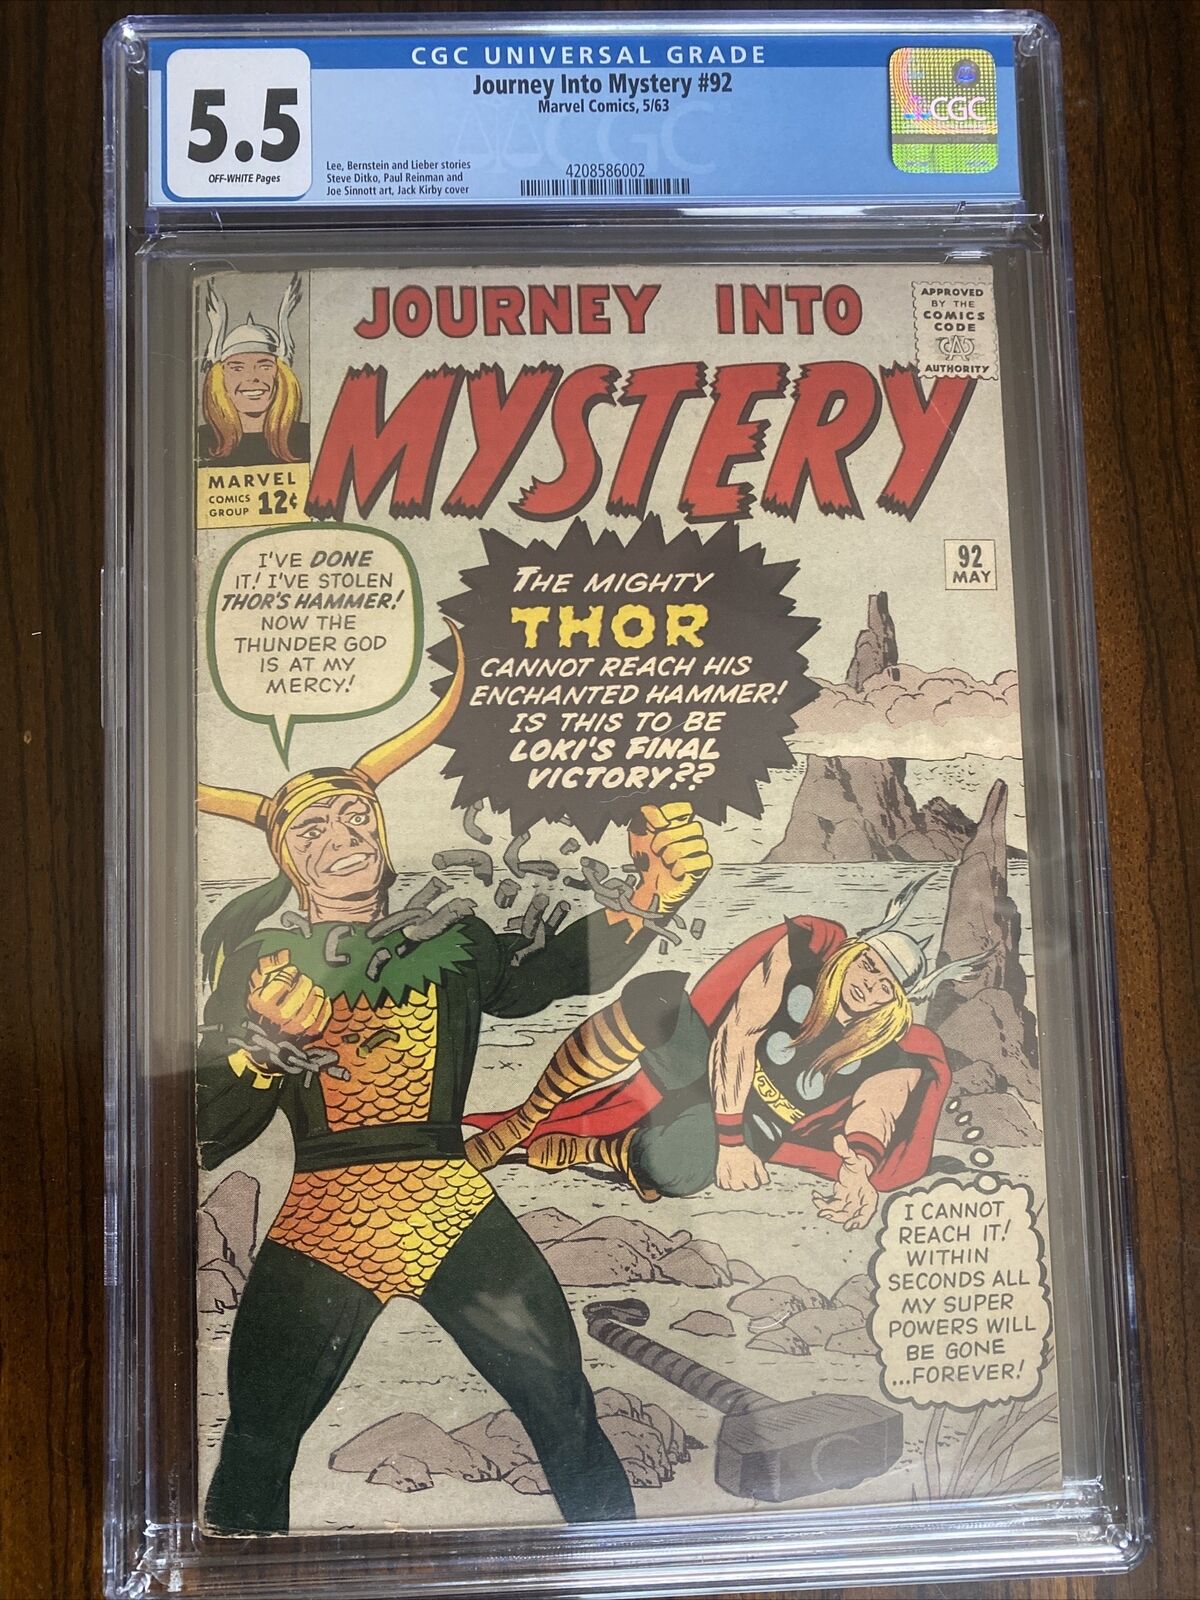 Journey into Mystery #92 CGC 5.5 from May 1963 Thor vs Loki